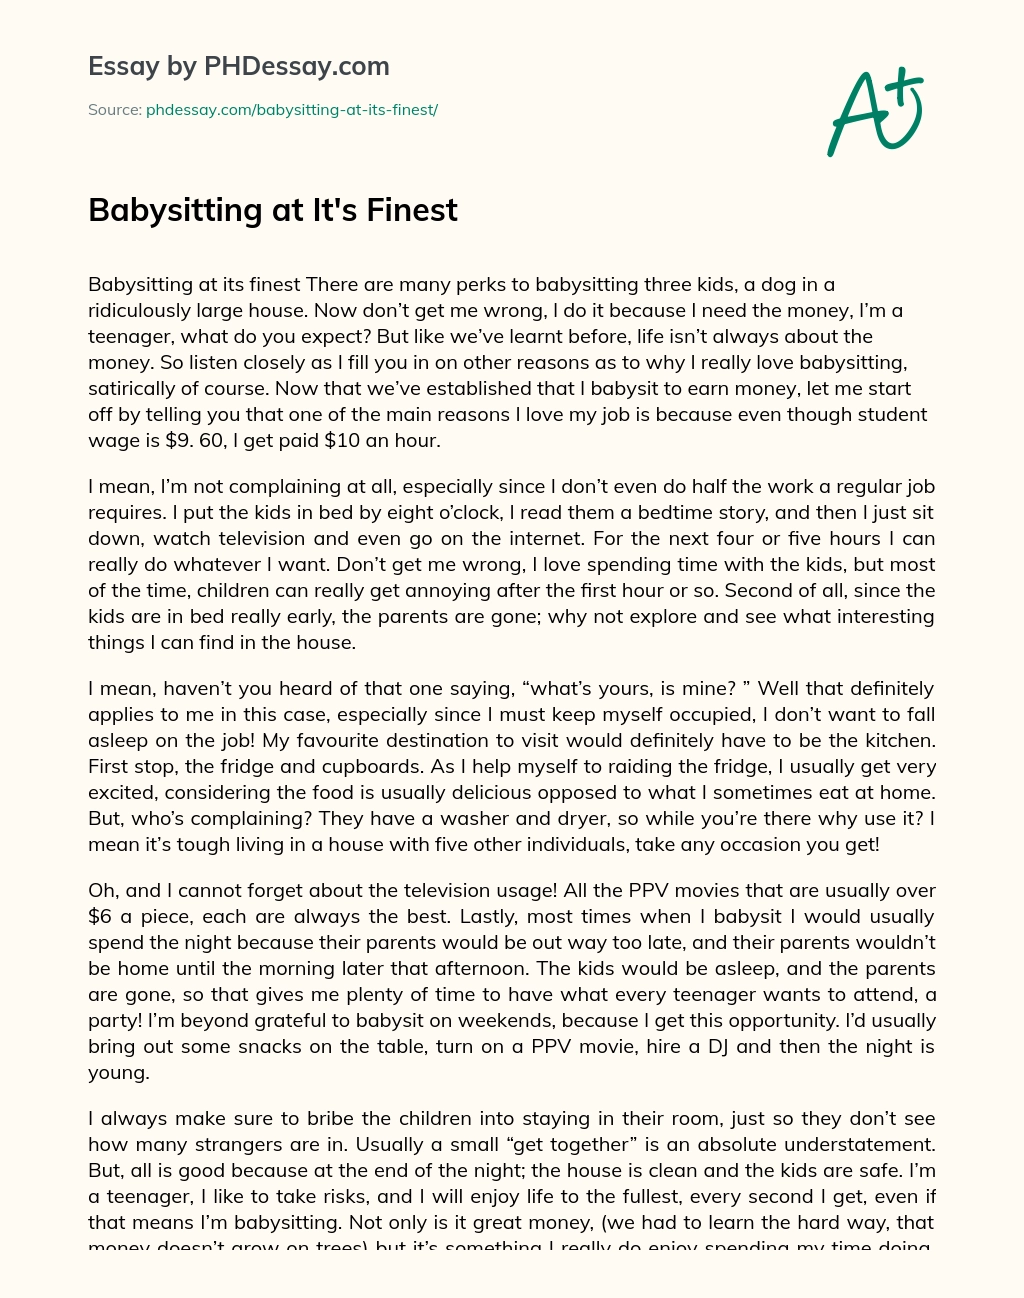 Babysitting at It’s Finest essay